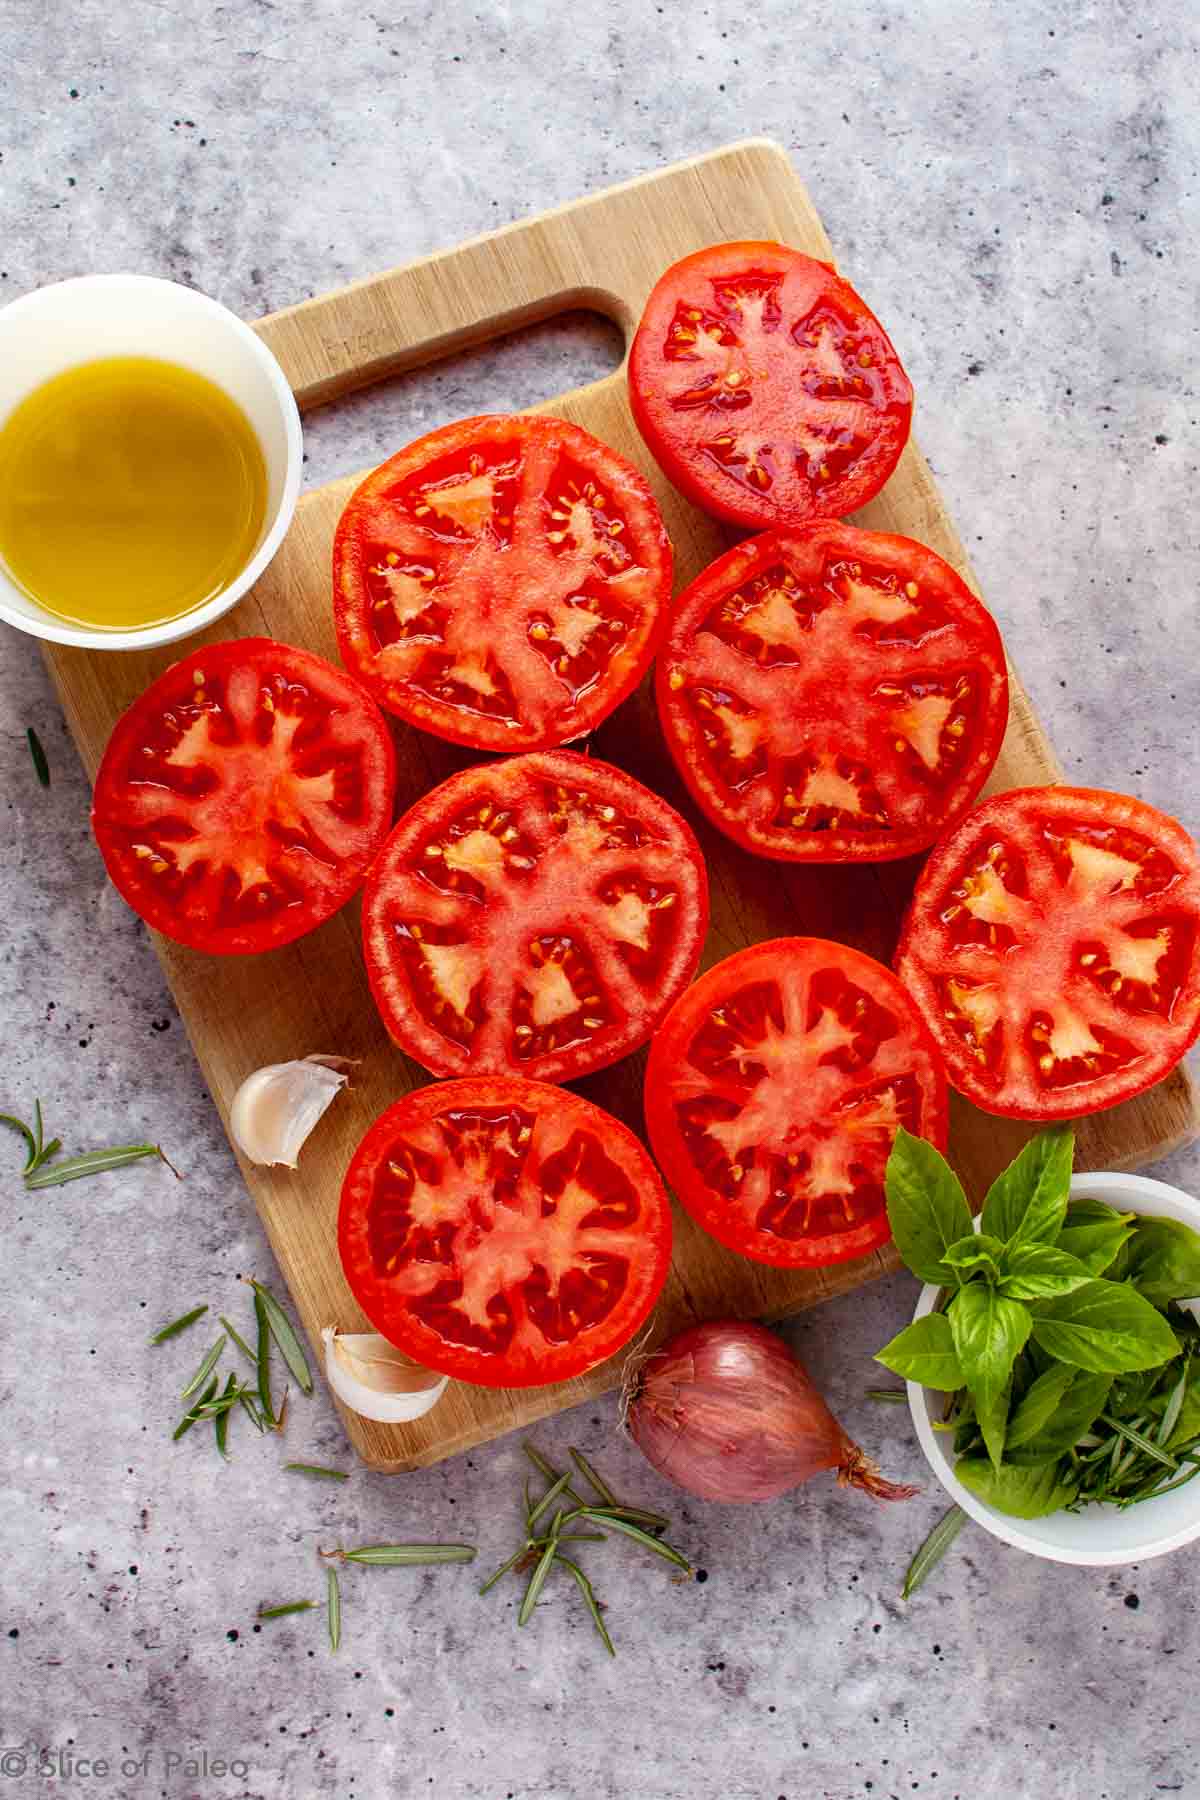 Provencal Tomatoes Ingredients